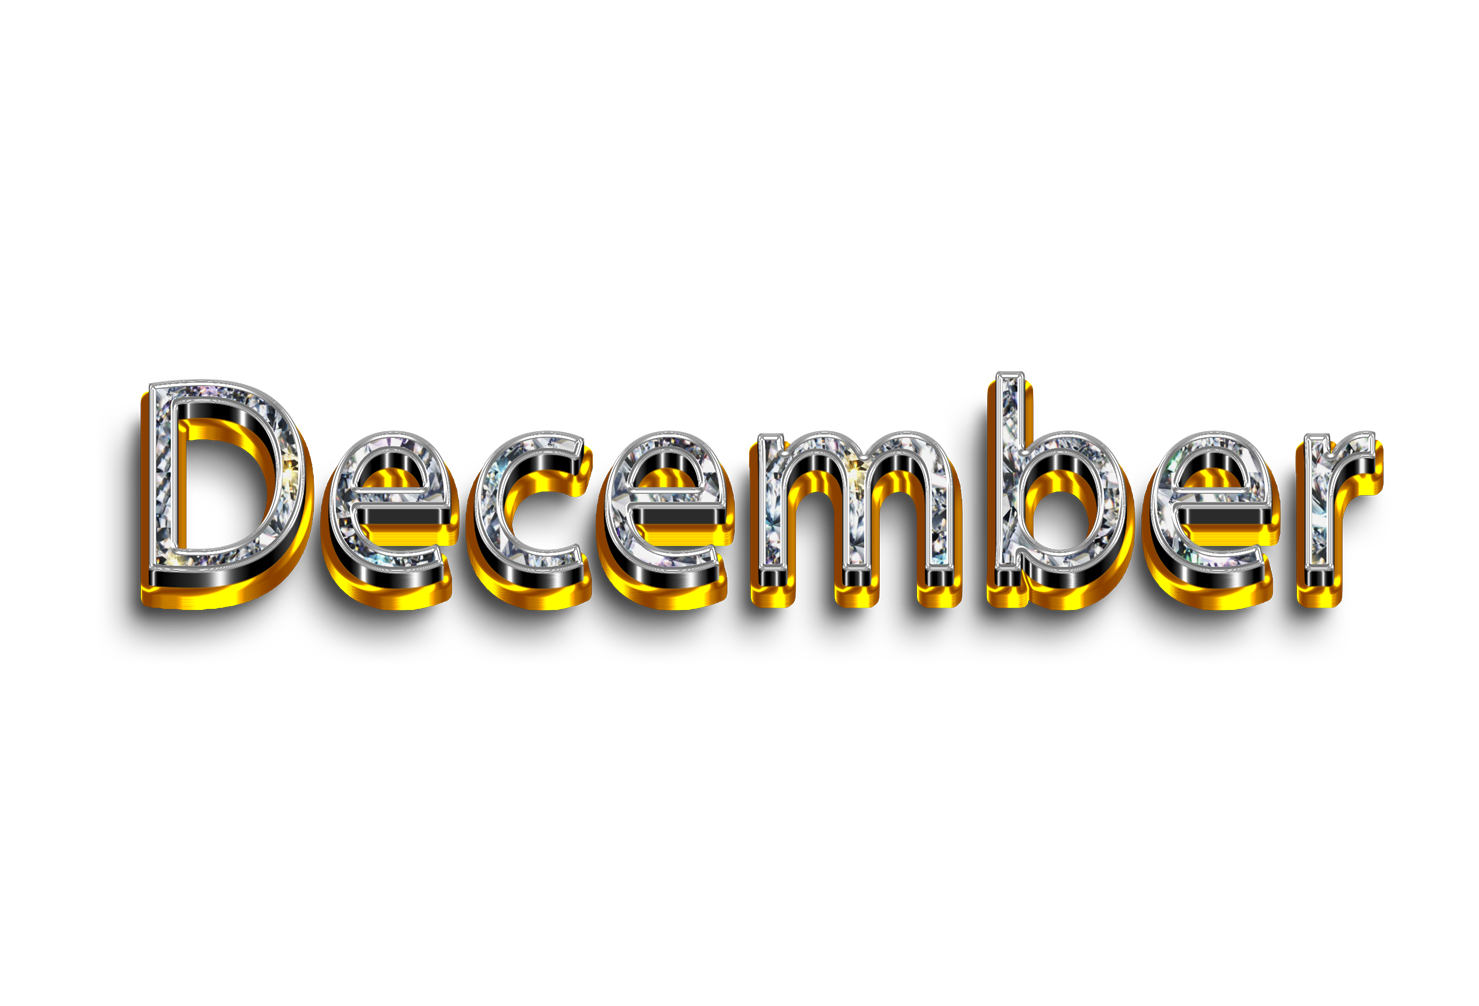 December png, word December png, December text png, December letters png, December word diamond gold text typography PNG images transparent background